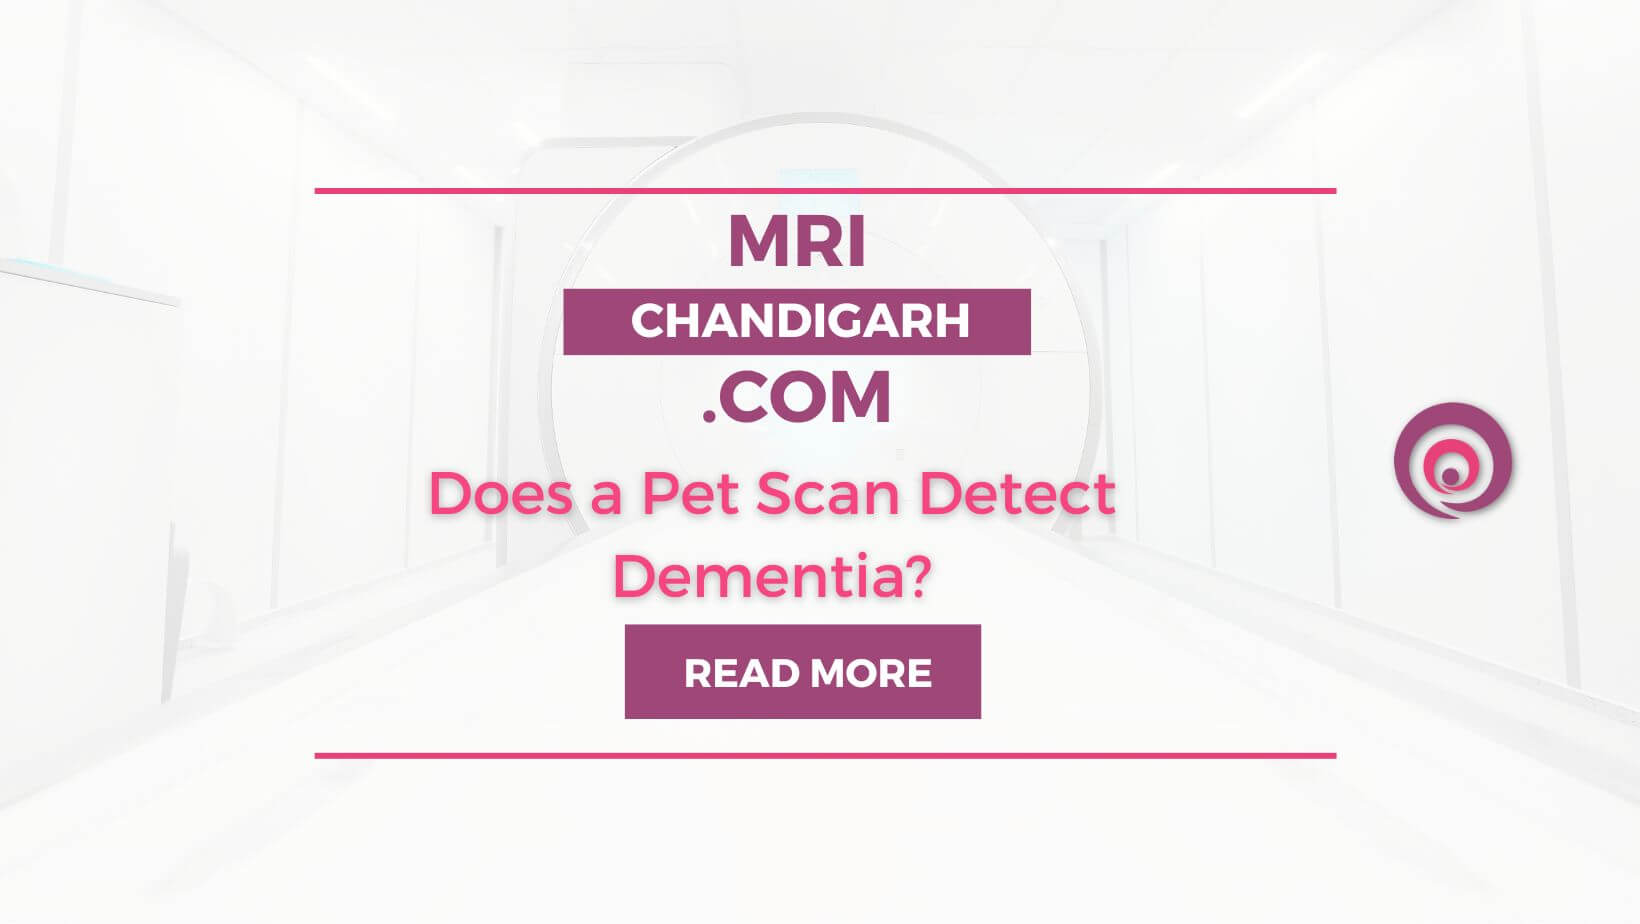 Does a Pet Scan Detect Dementia?